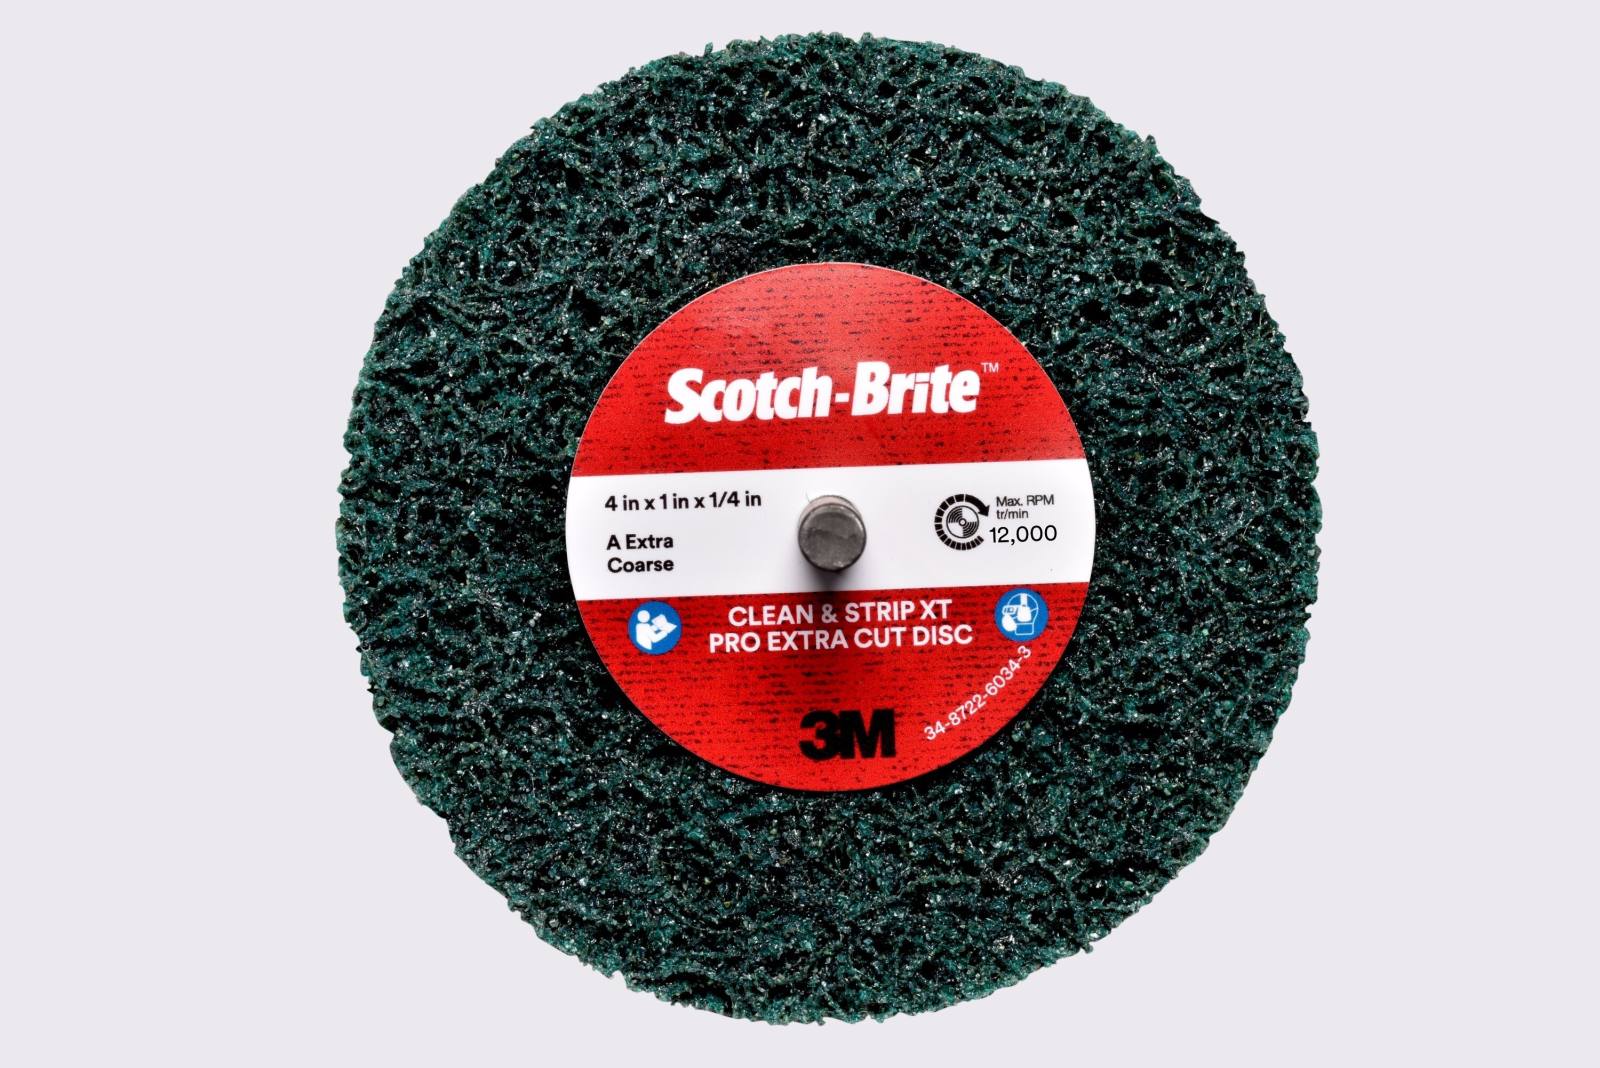 3M Scotch-Brite Coarse cleaning disc XT-ZS Pro Extra Cut, 75 mm, 13 mm, 6 mm, A, extra coarse